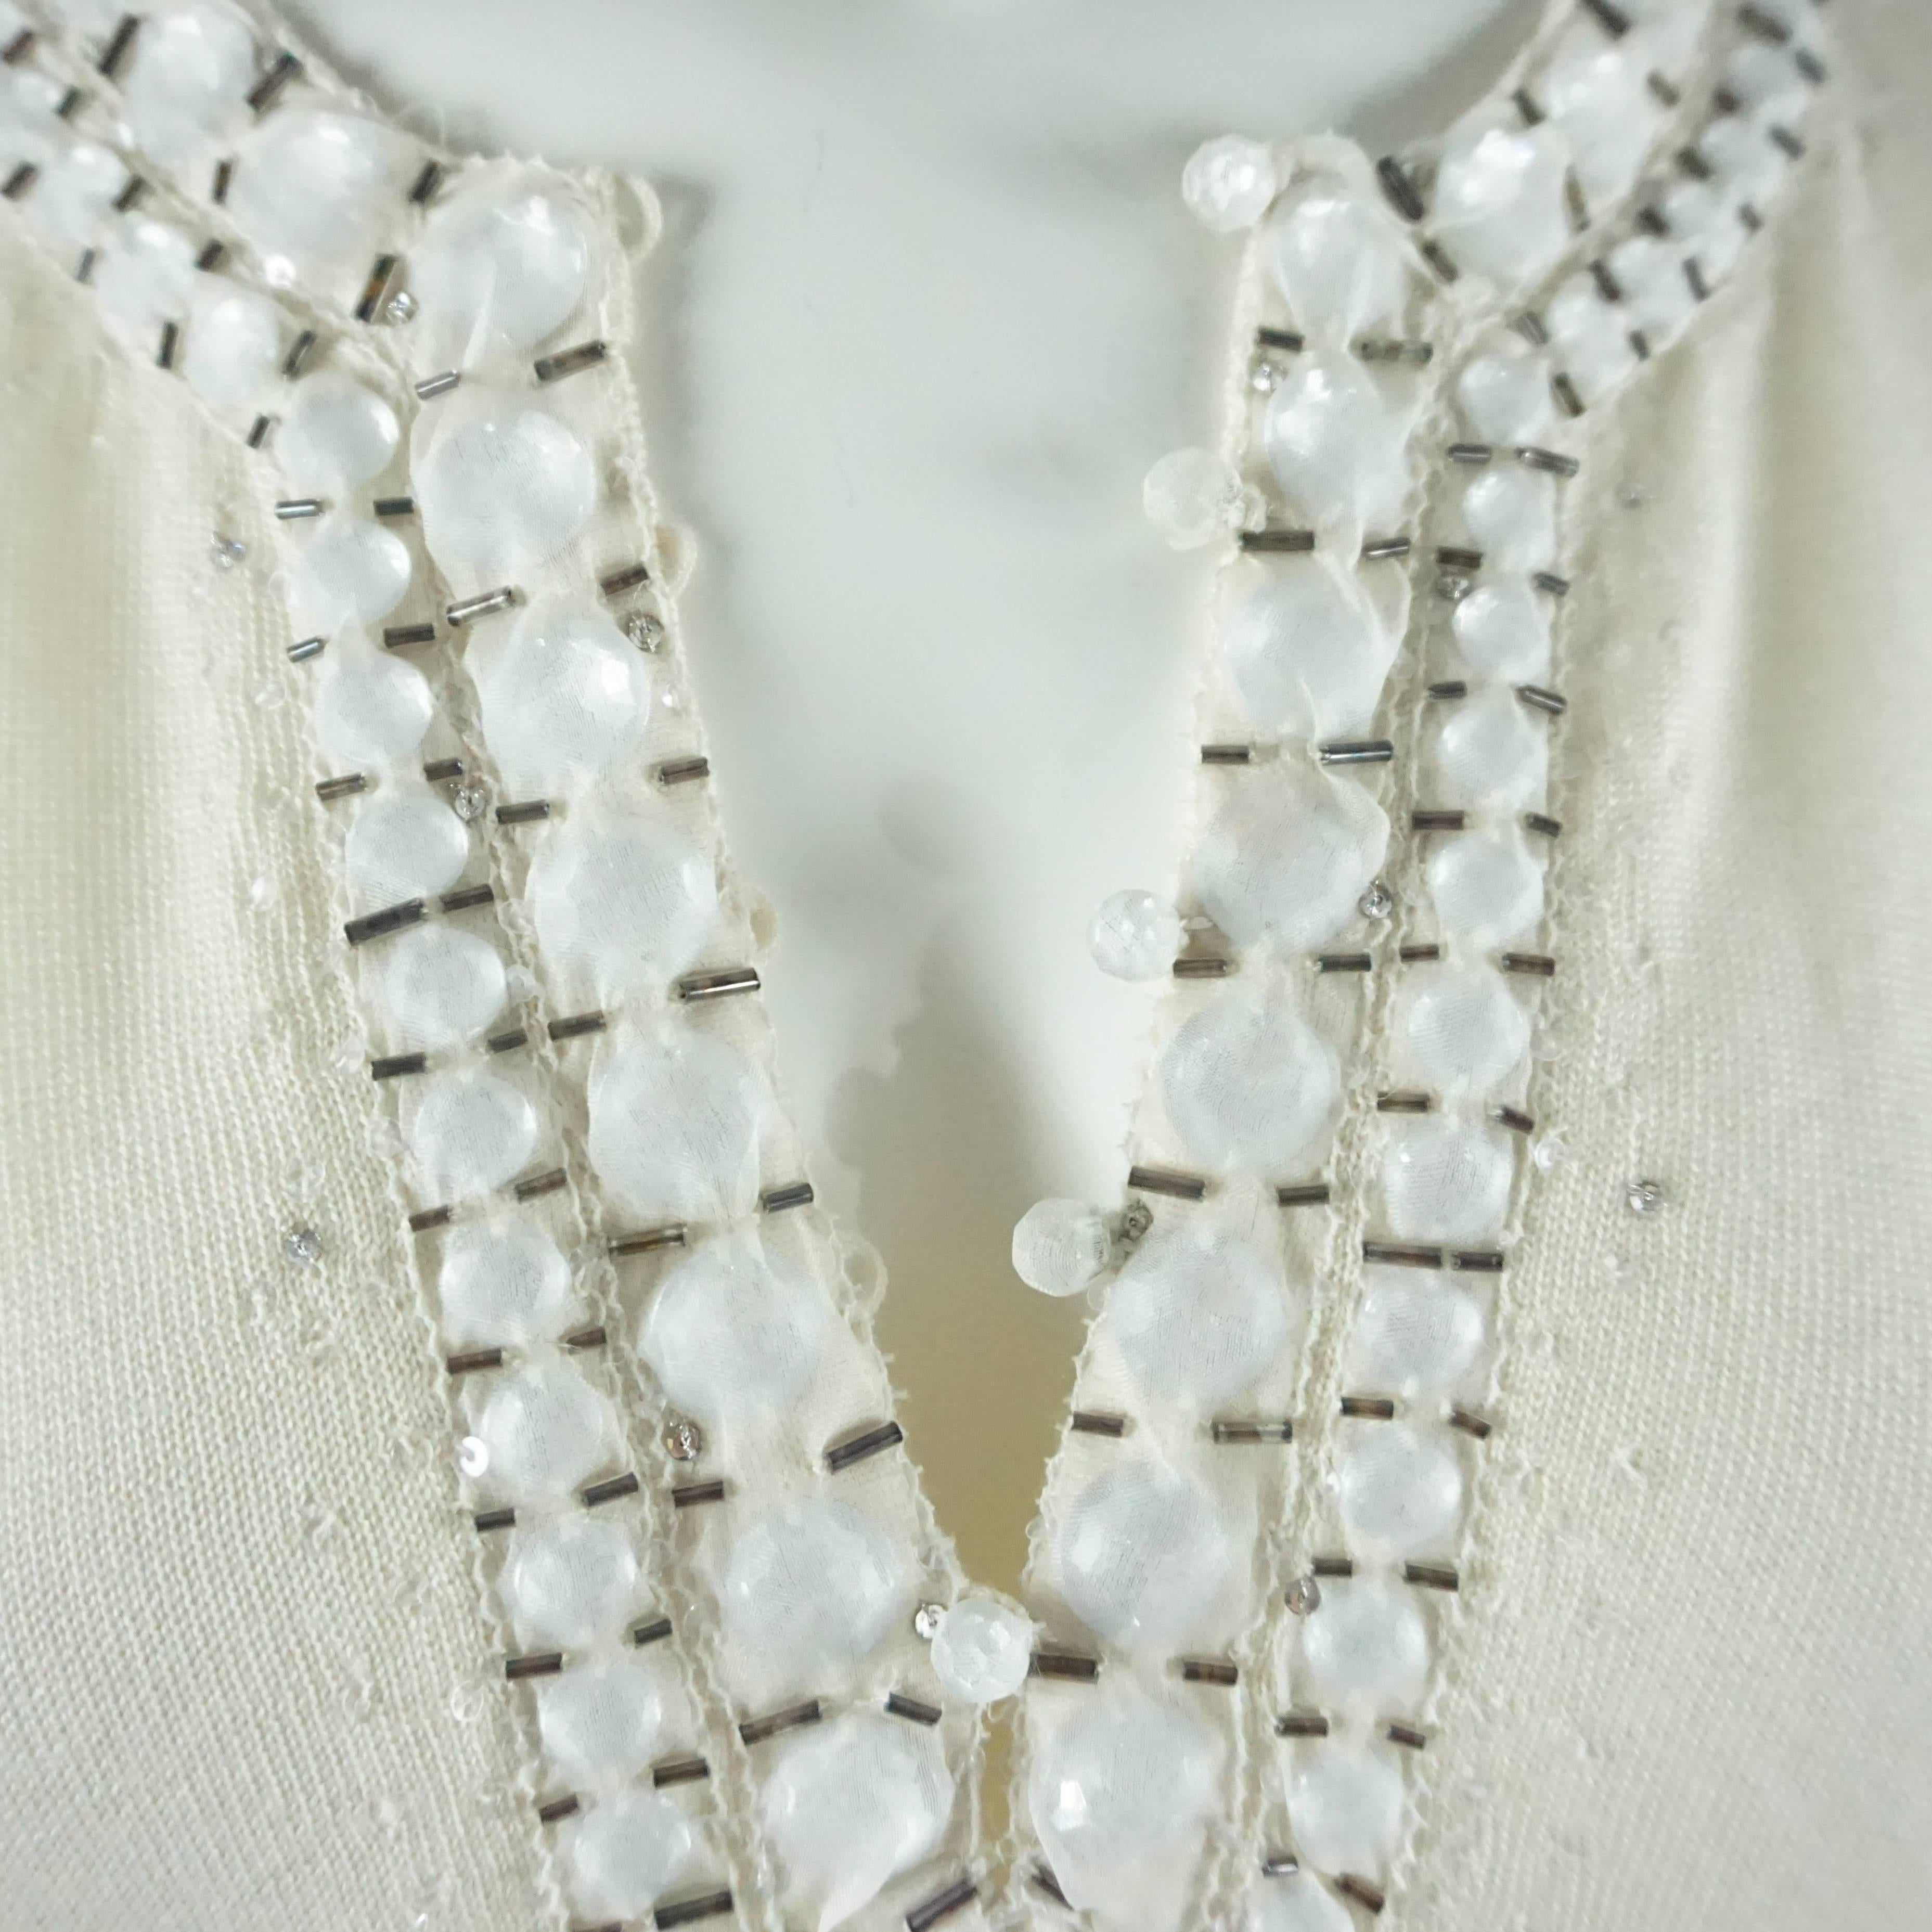 Women's Oscar de la Renta Ivory Cashmere/Silk Sweater with Stones - L